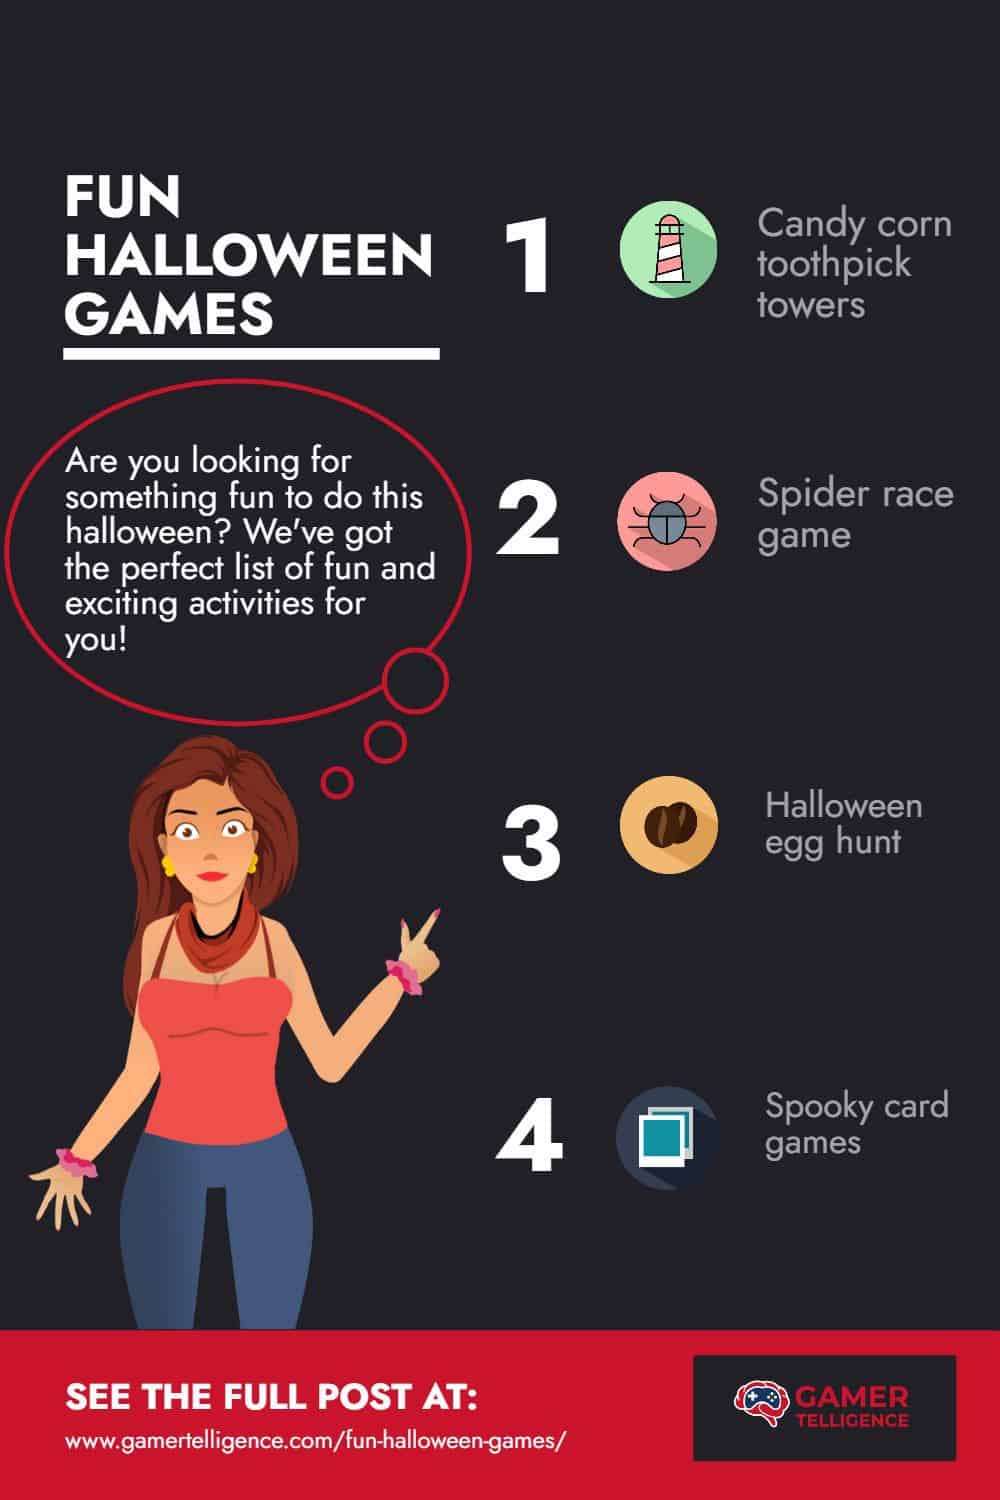 Fun Halloween Games Infographic